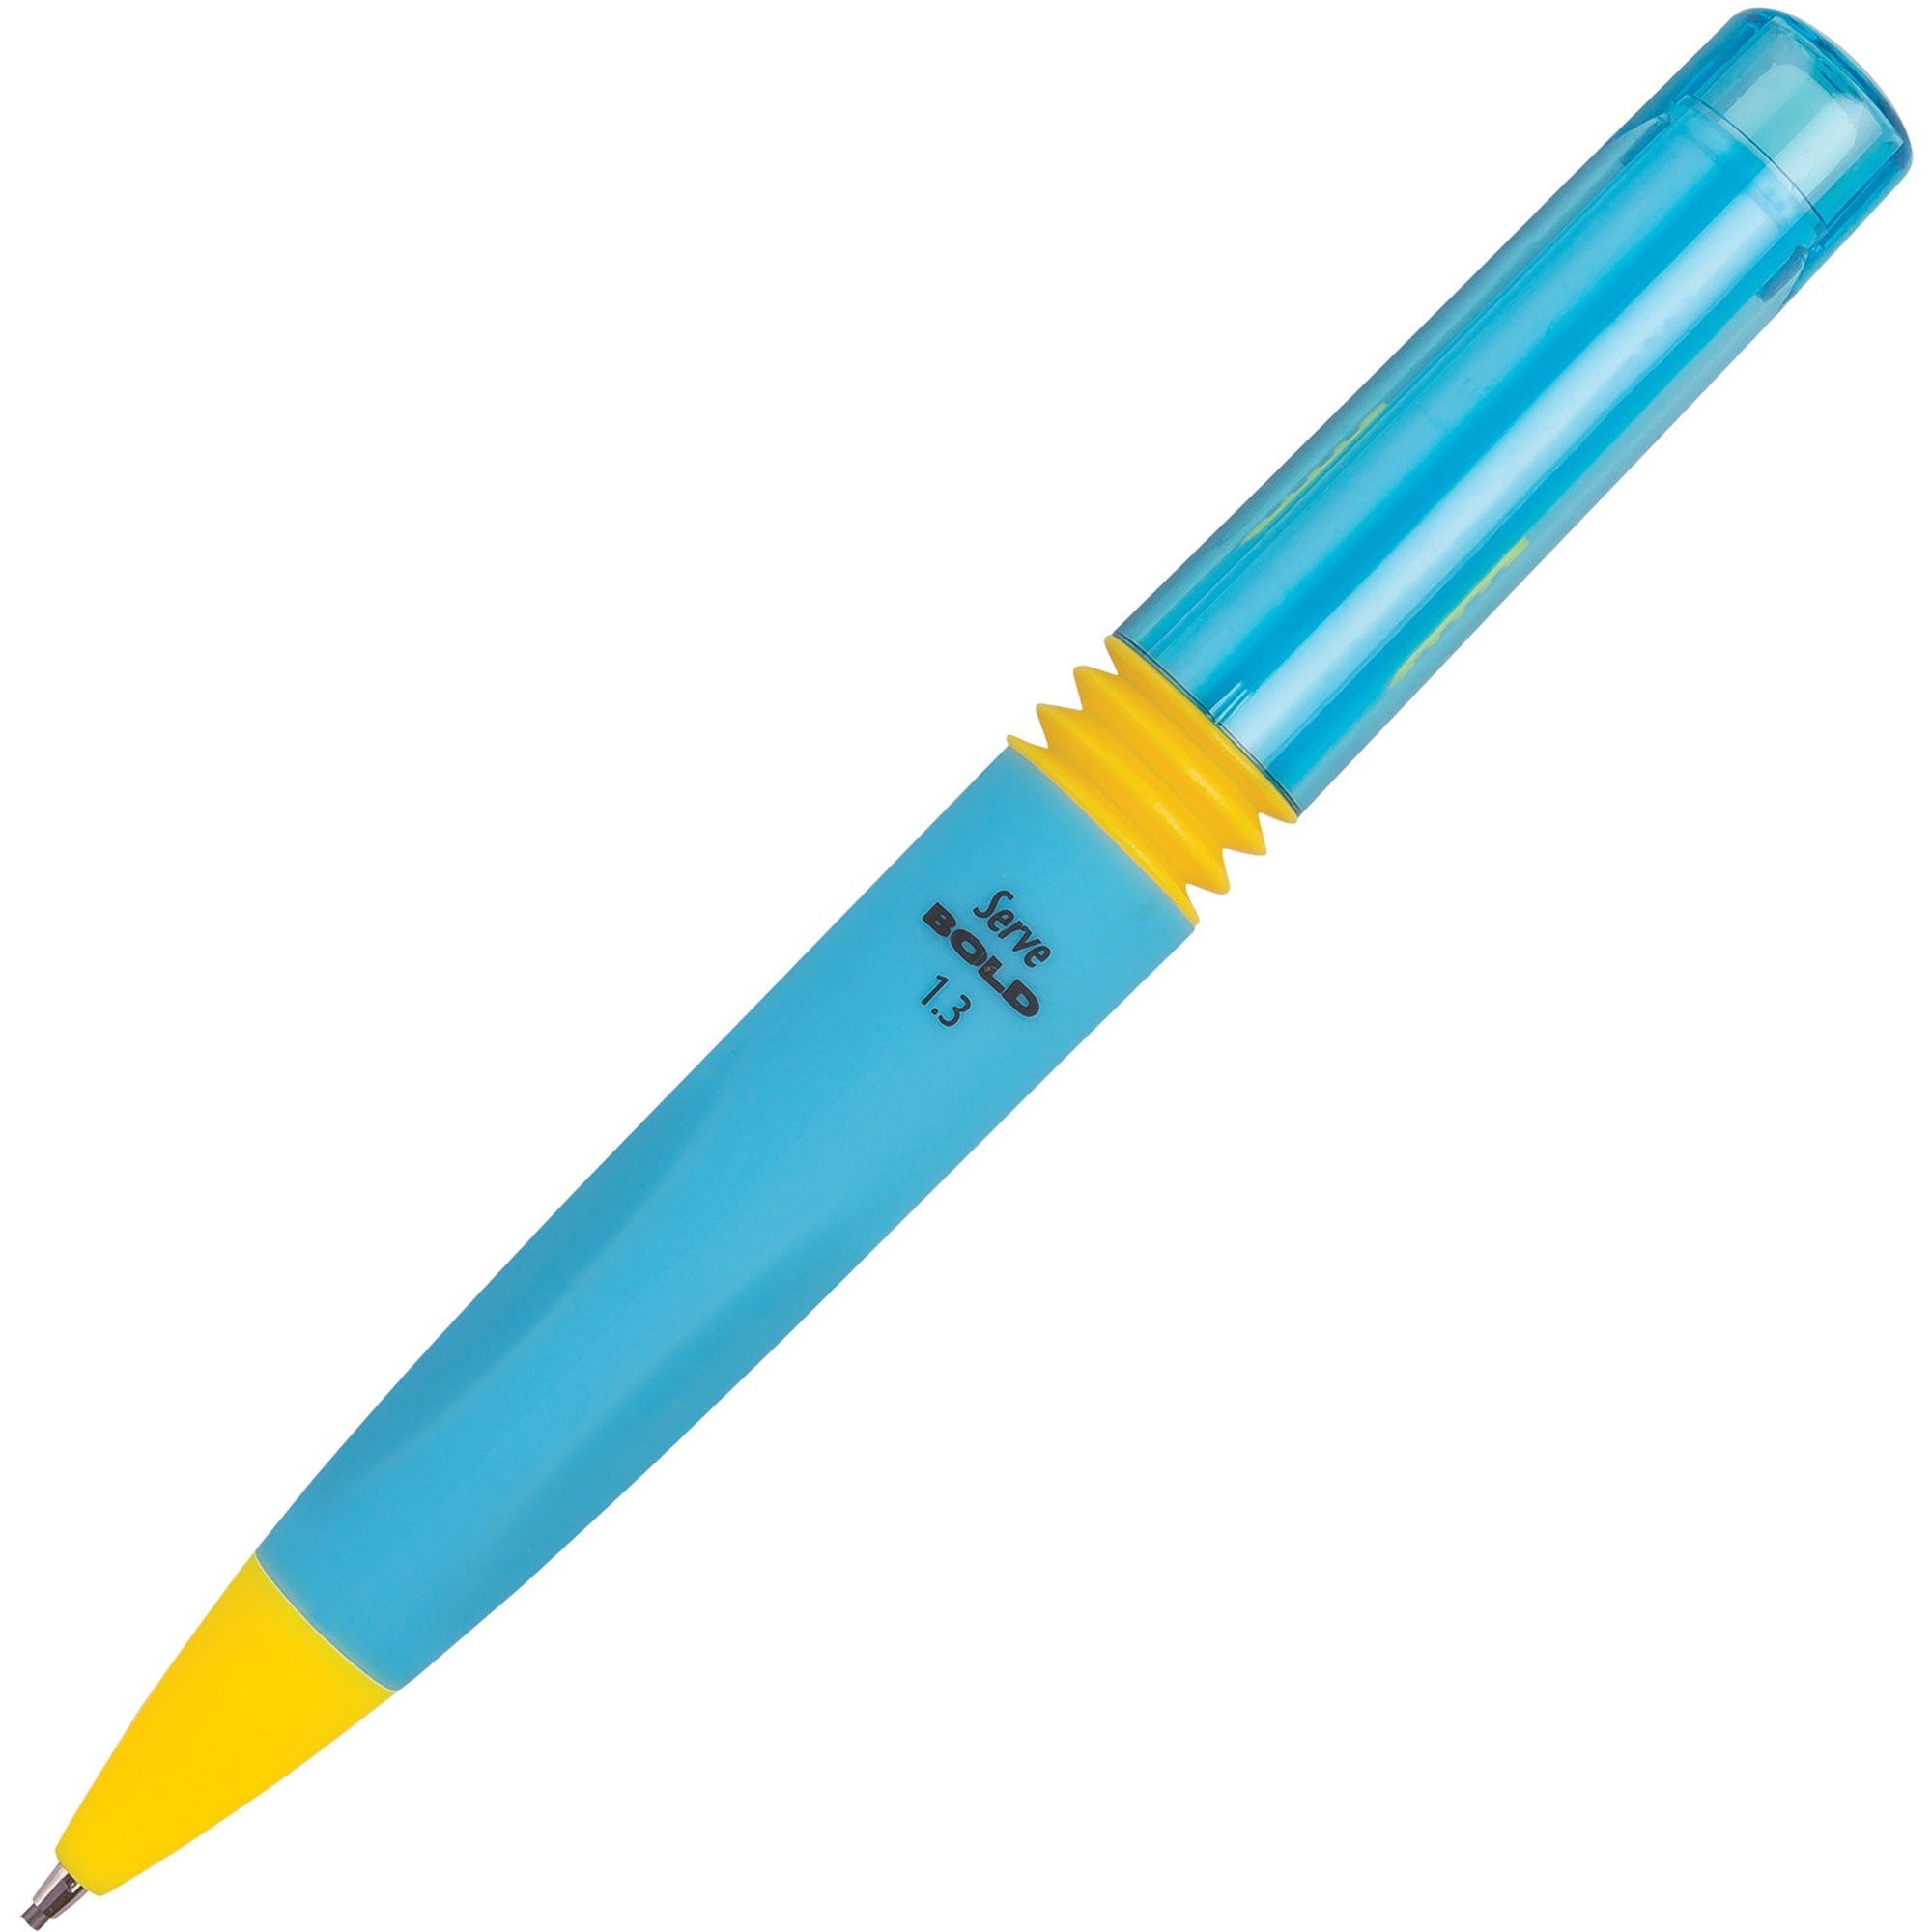 serve-bold-mechanical-pencil-13-mm-lead-diameter-bold-point-black-lead-blue-plastic-barrel-1-each_srvbd13k12m - 1